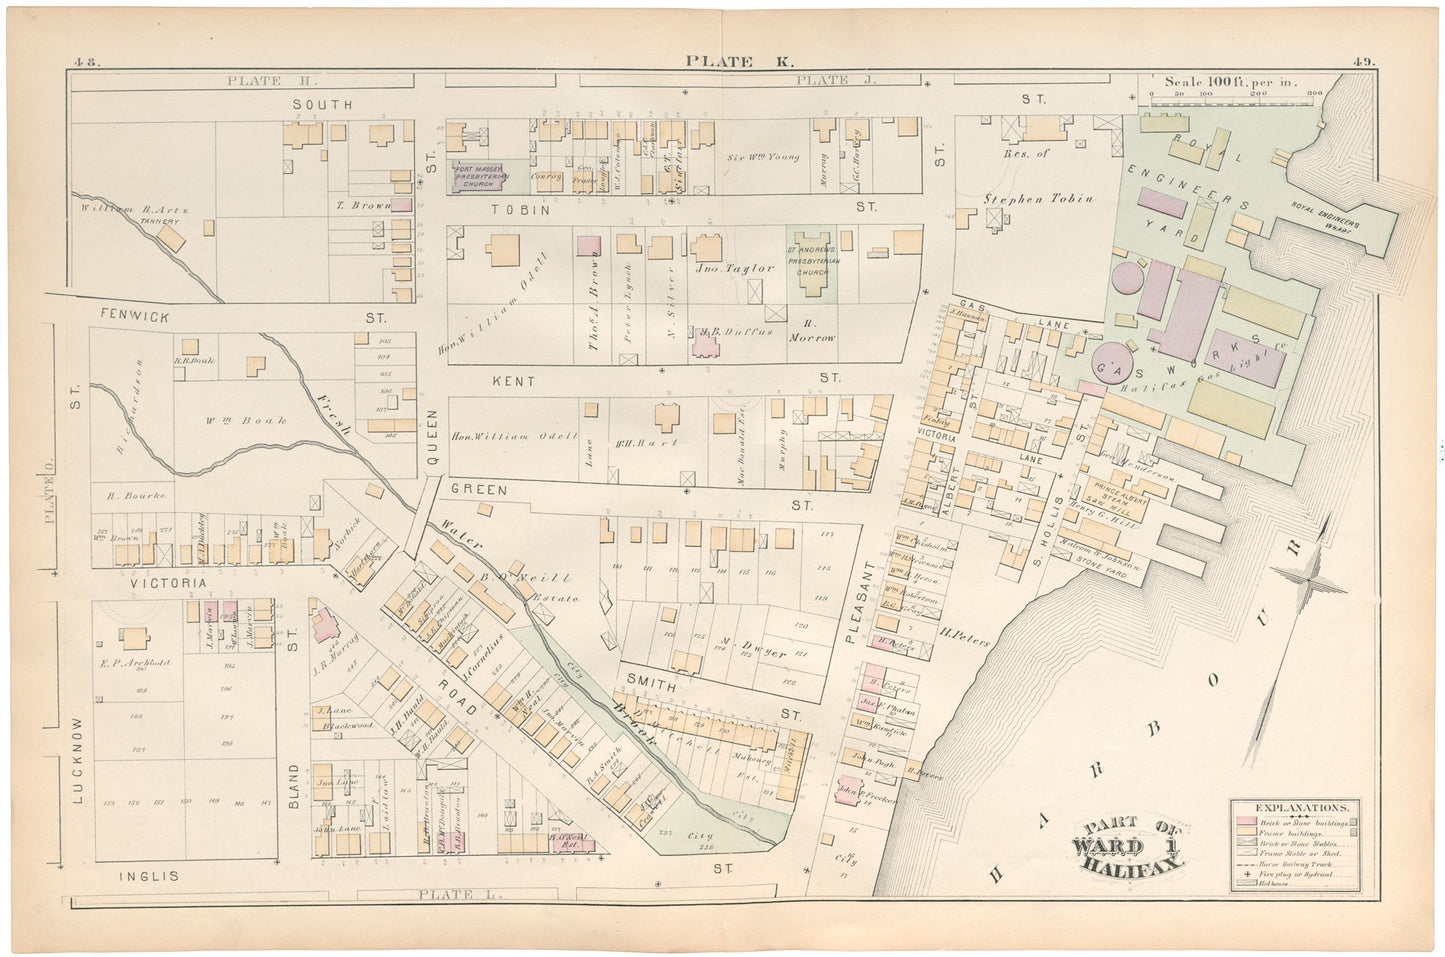 Hopkins' City Atlas of Halifax, Nova Scotia: Plate K - Part of Ward 1